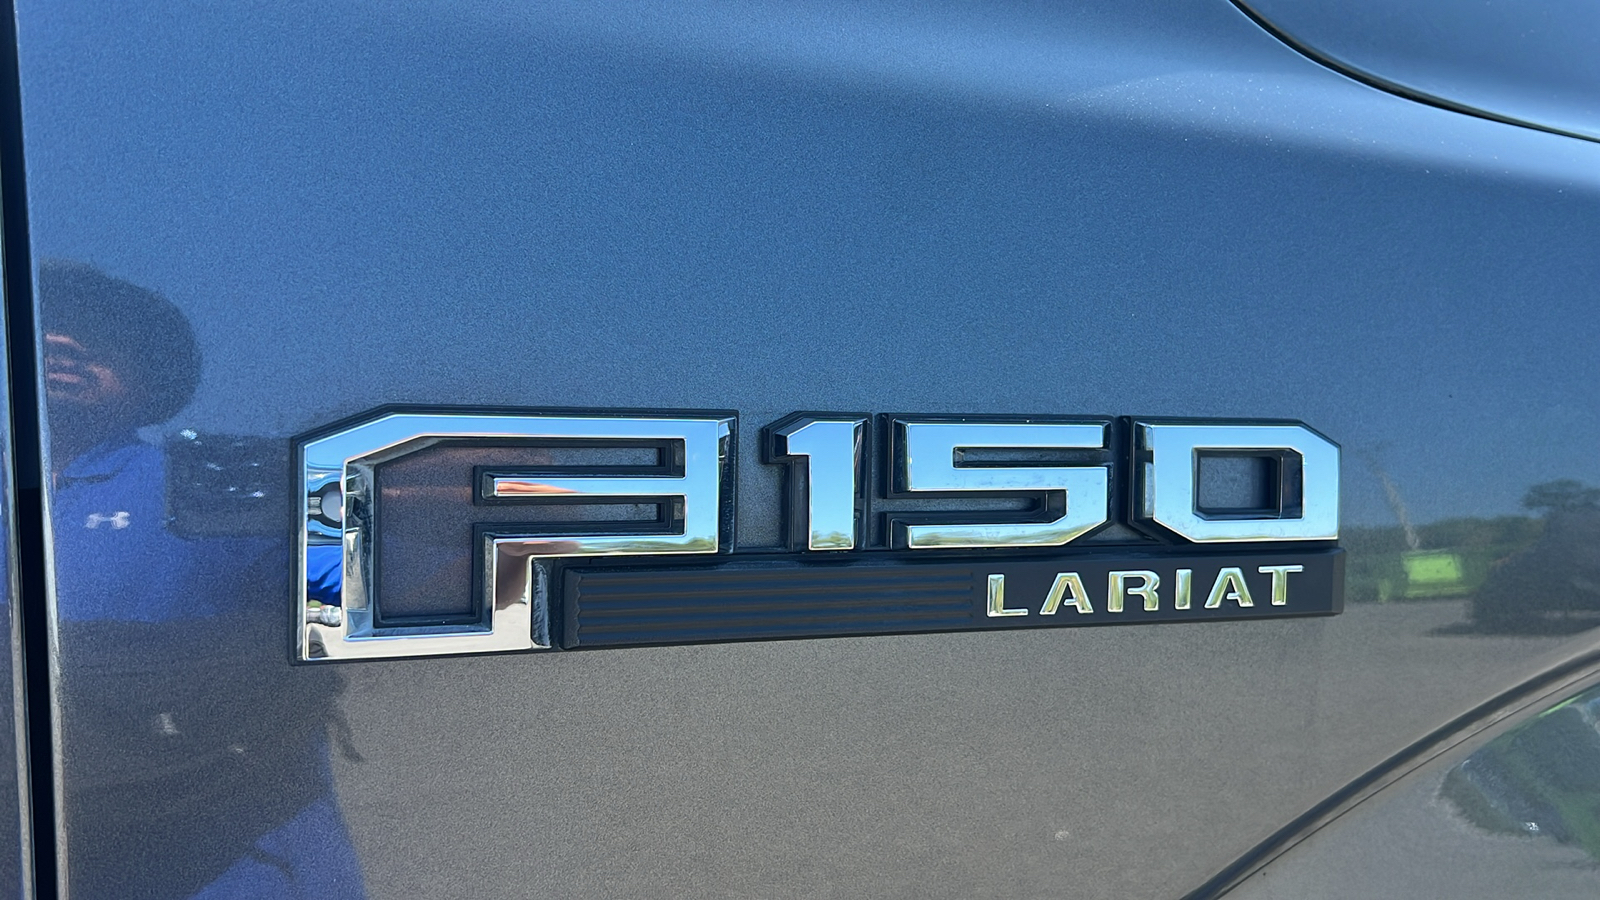 2018 Ford F-150 Lariat 11